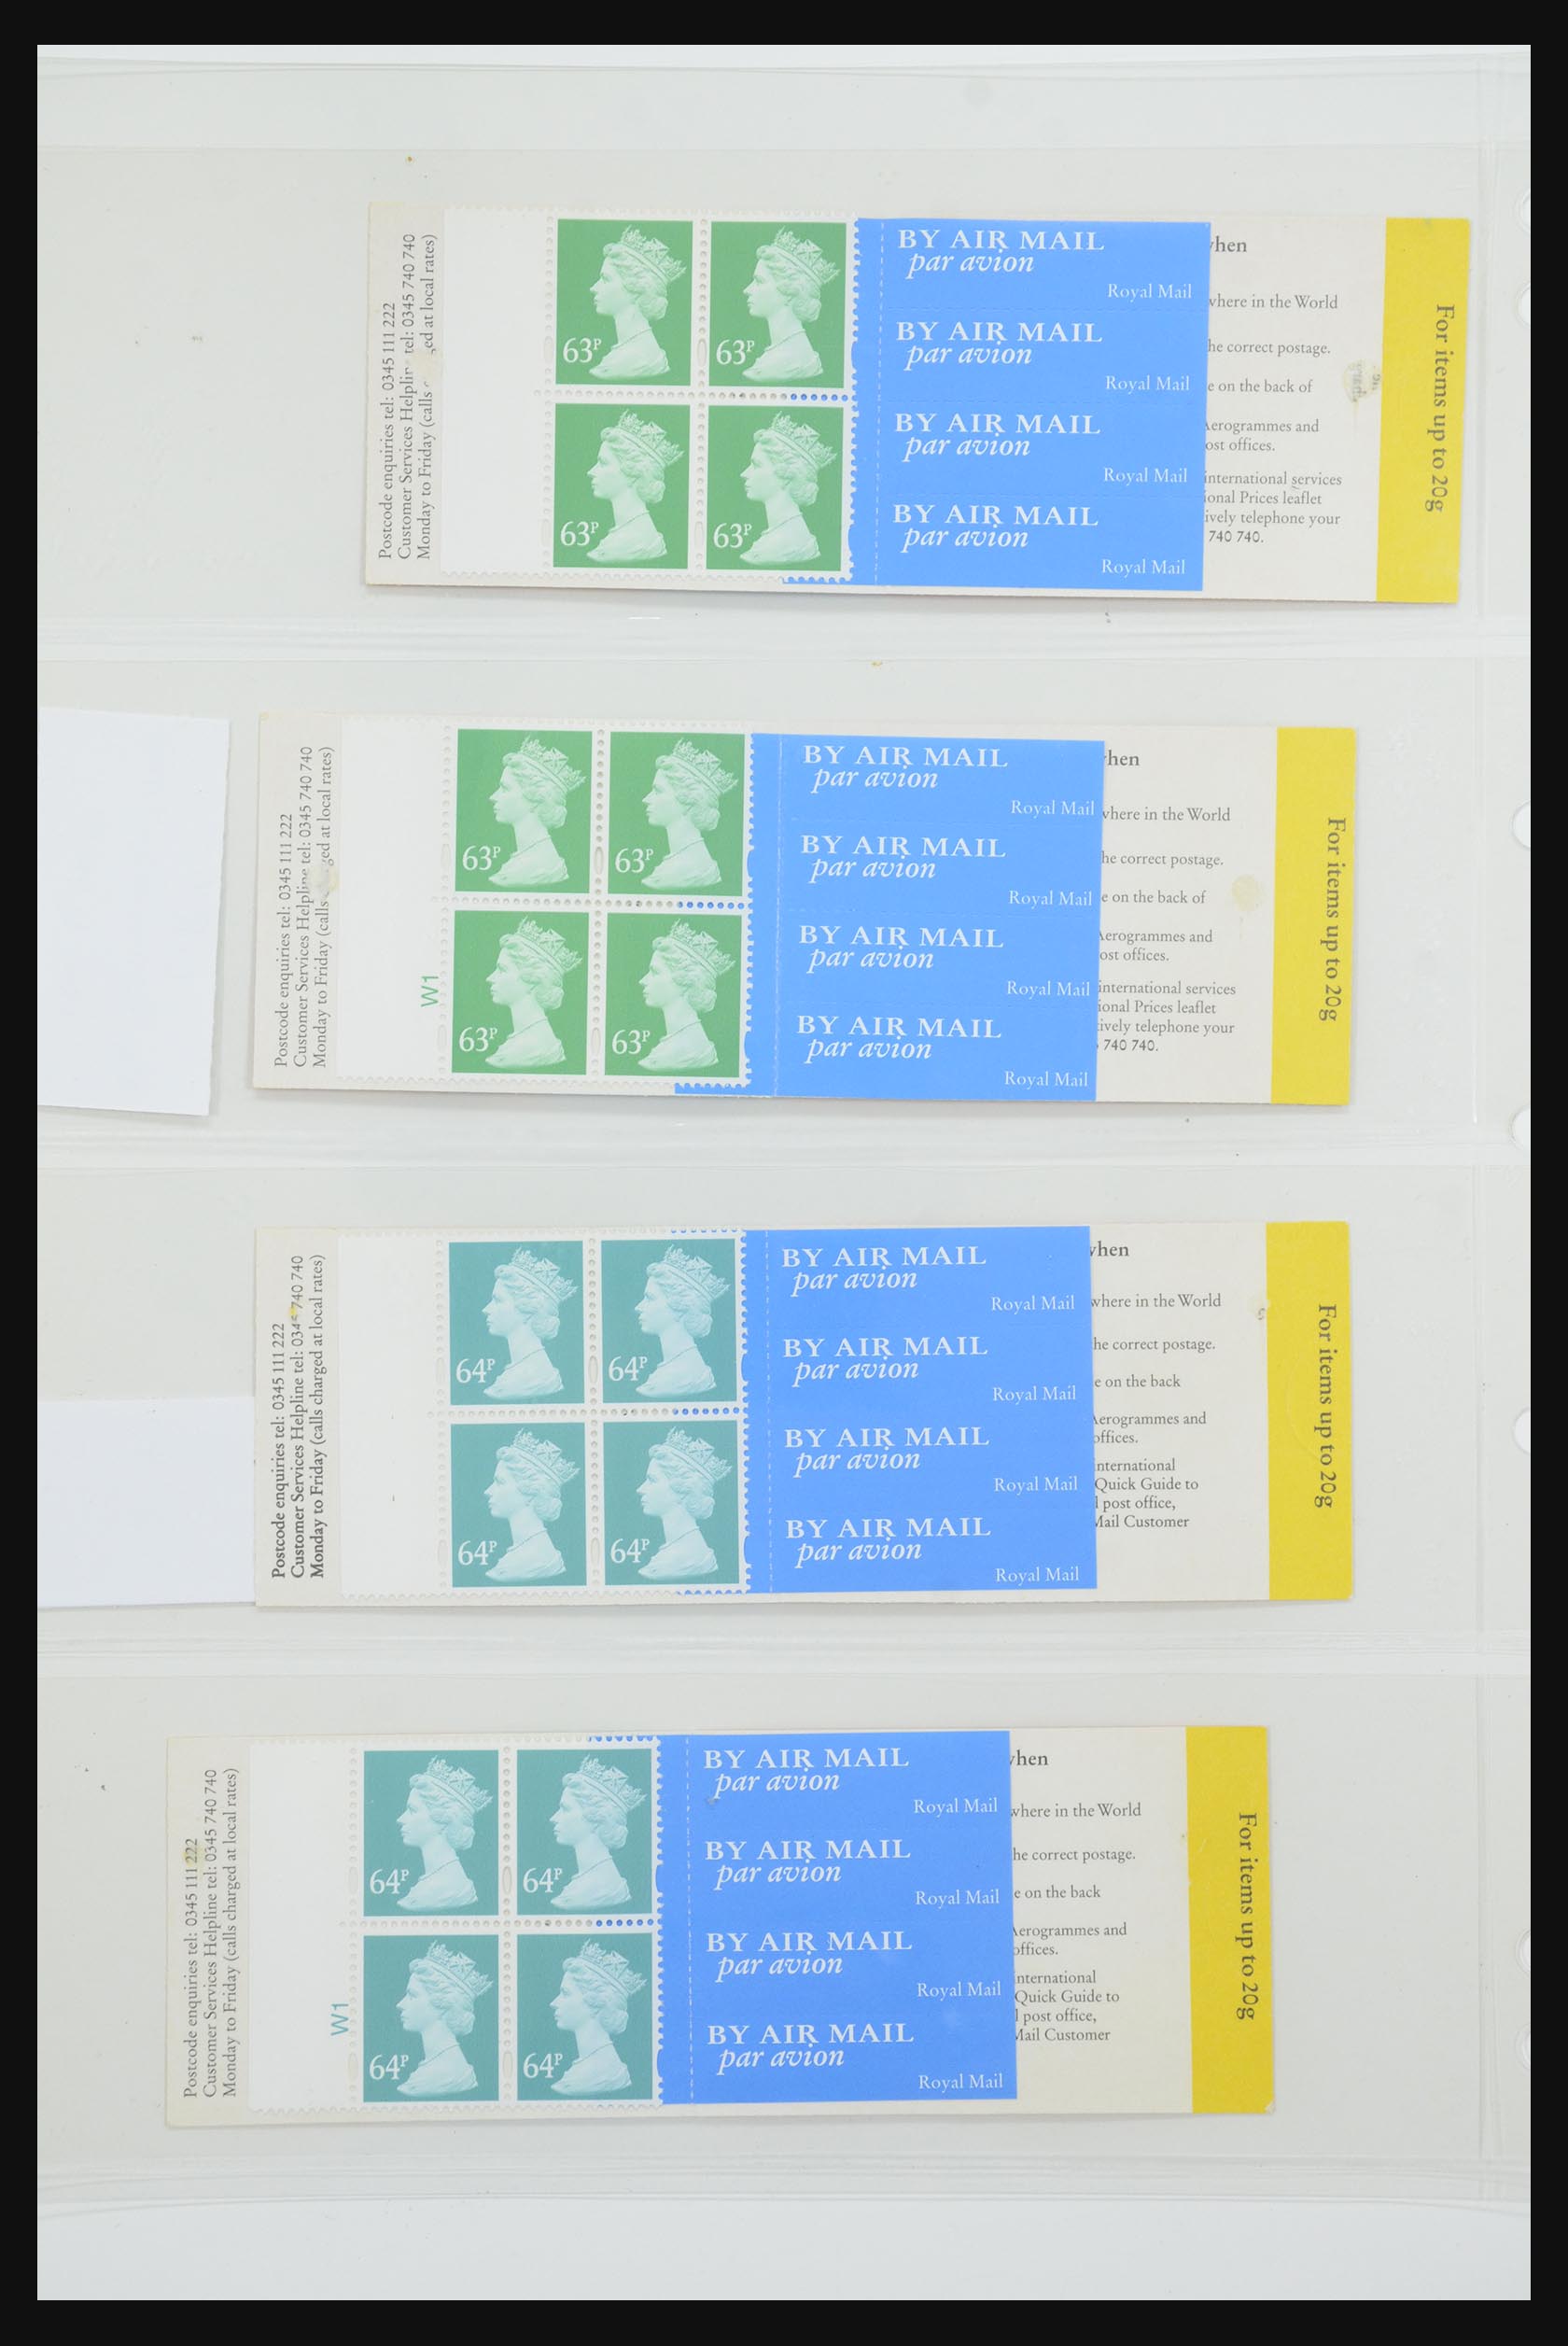 31959 084 - 31959 Great Britain stampbooklets 1987-2016!!